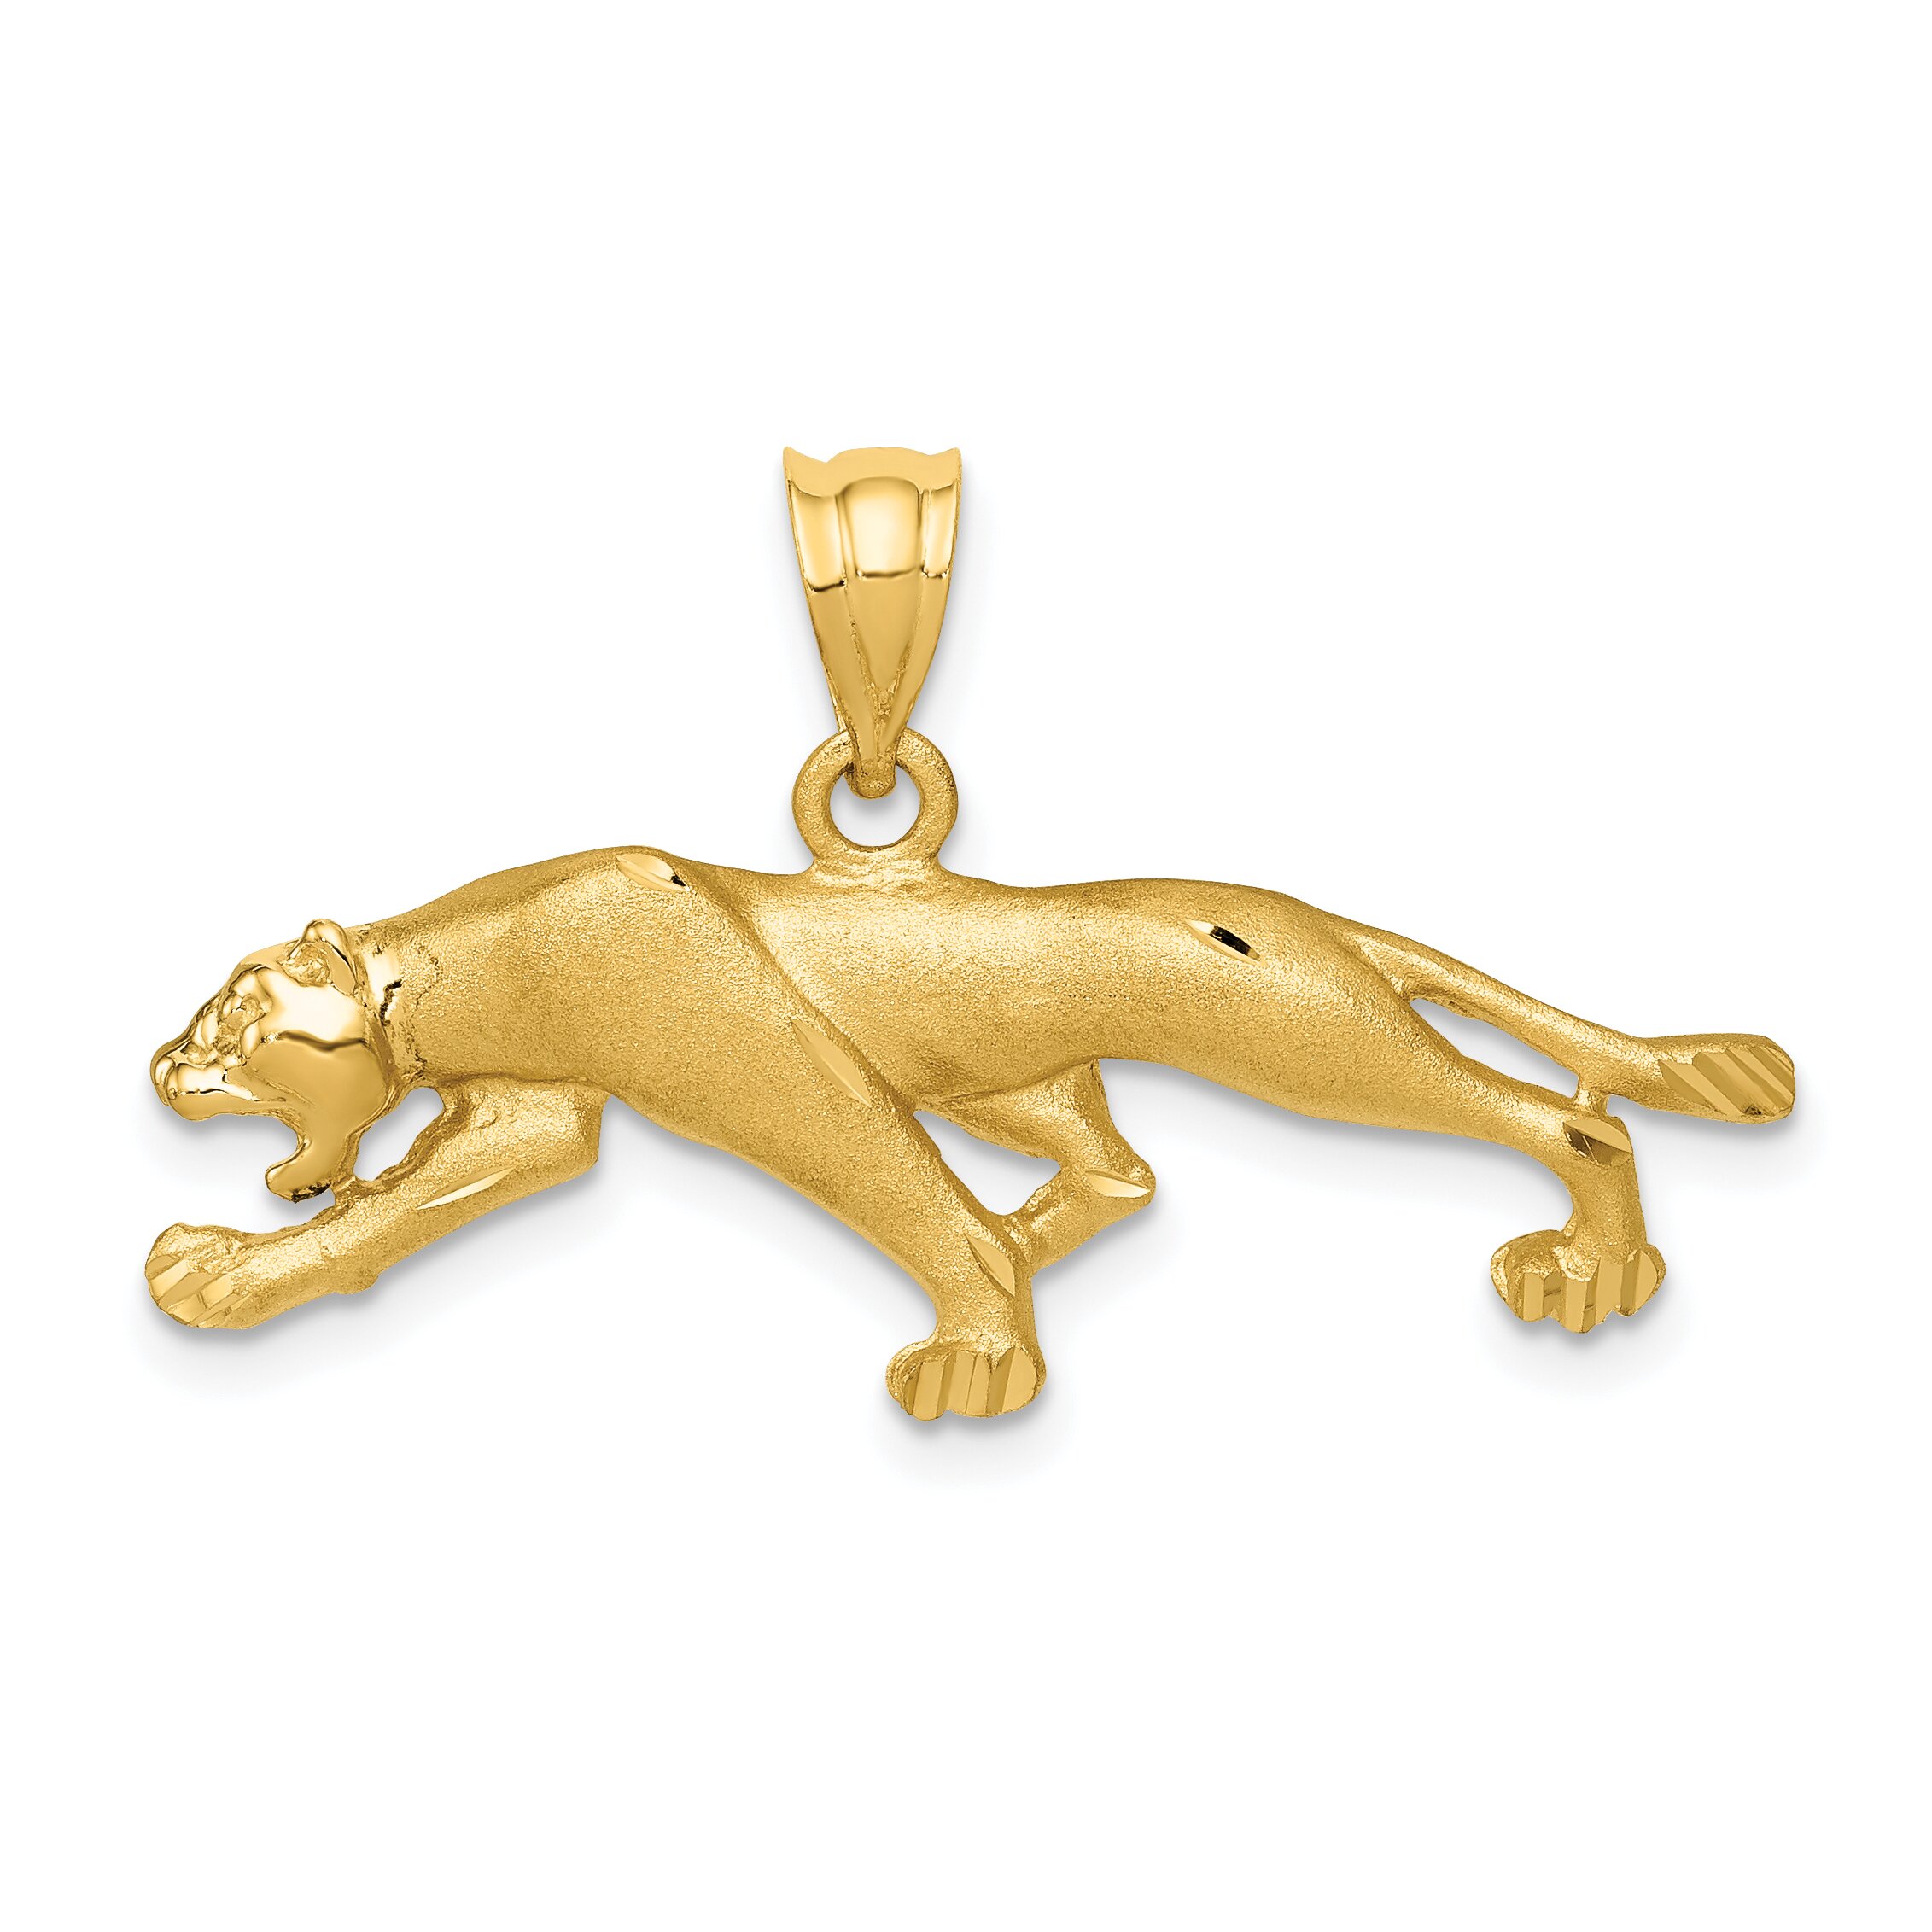 Findingking 14K Gold Jaguar Pendant